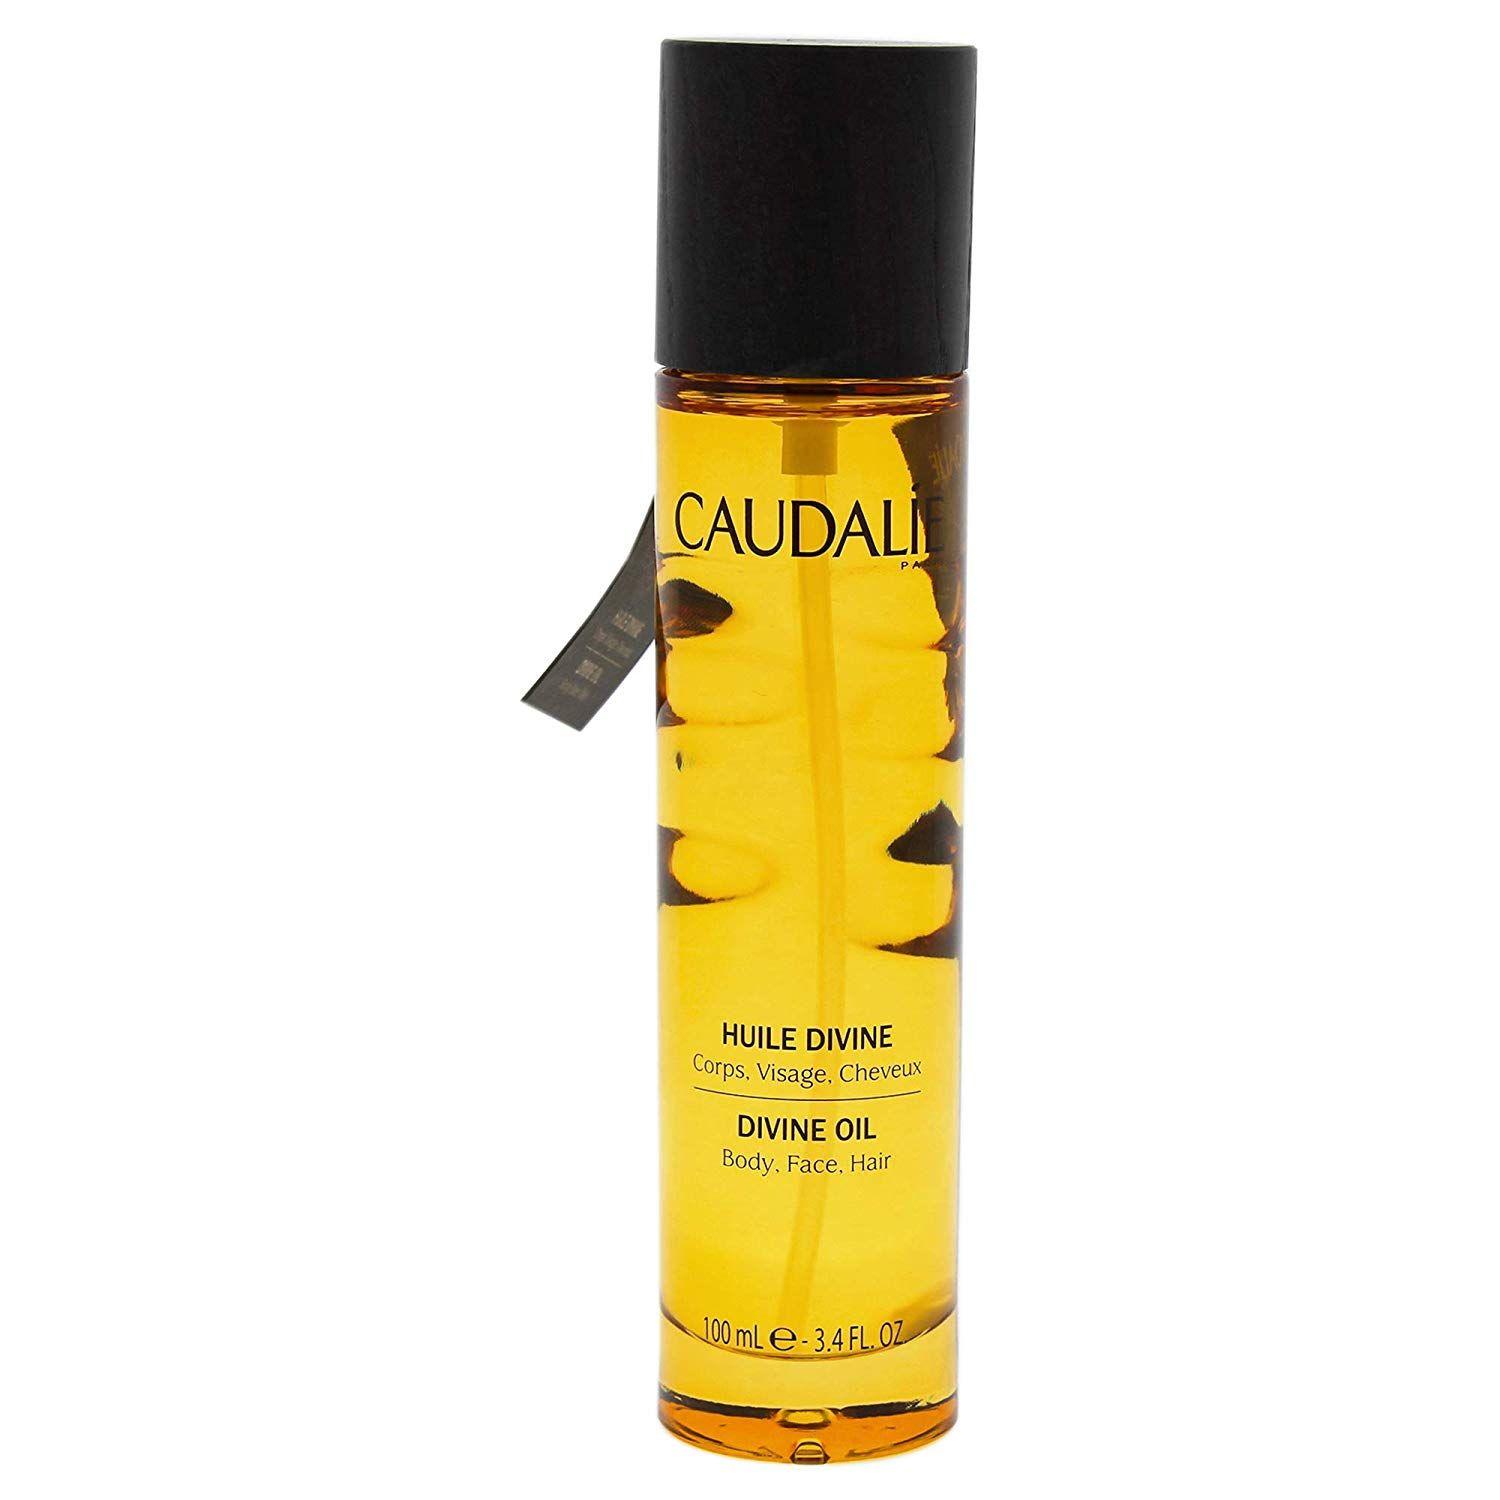 Caudalie Paris Logo - Amazon.com : Caudalie Vinotherapie Divine Oil, 3.4 Ounce : Body Oils ...